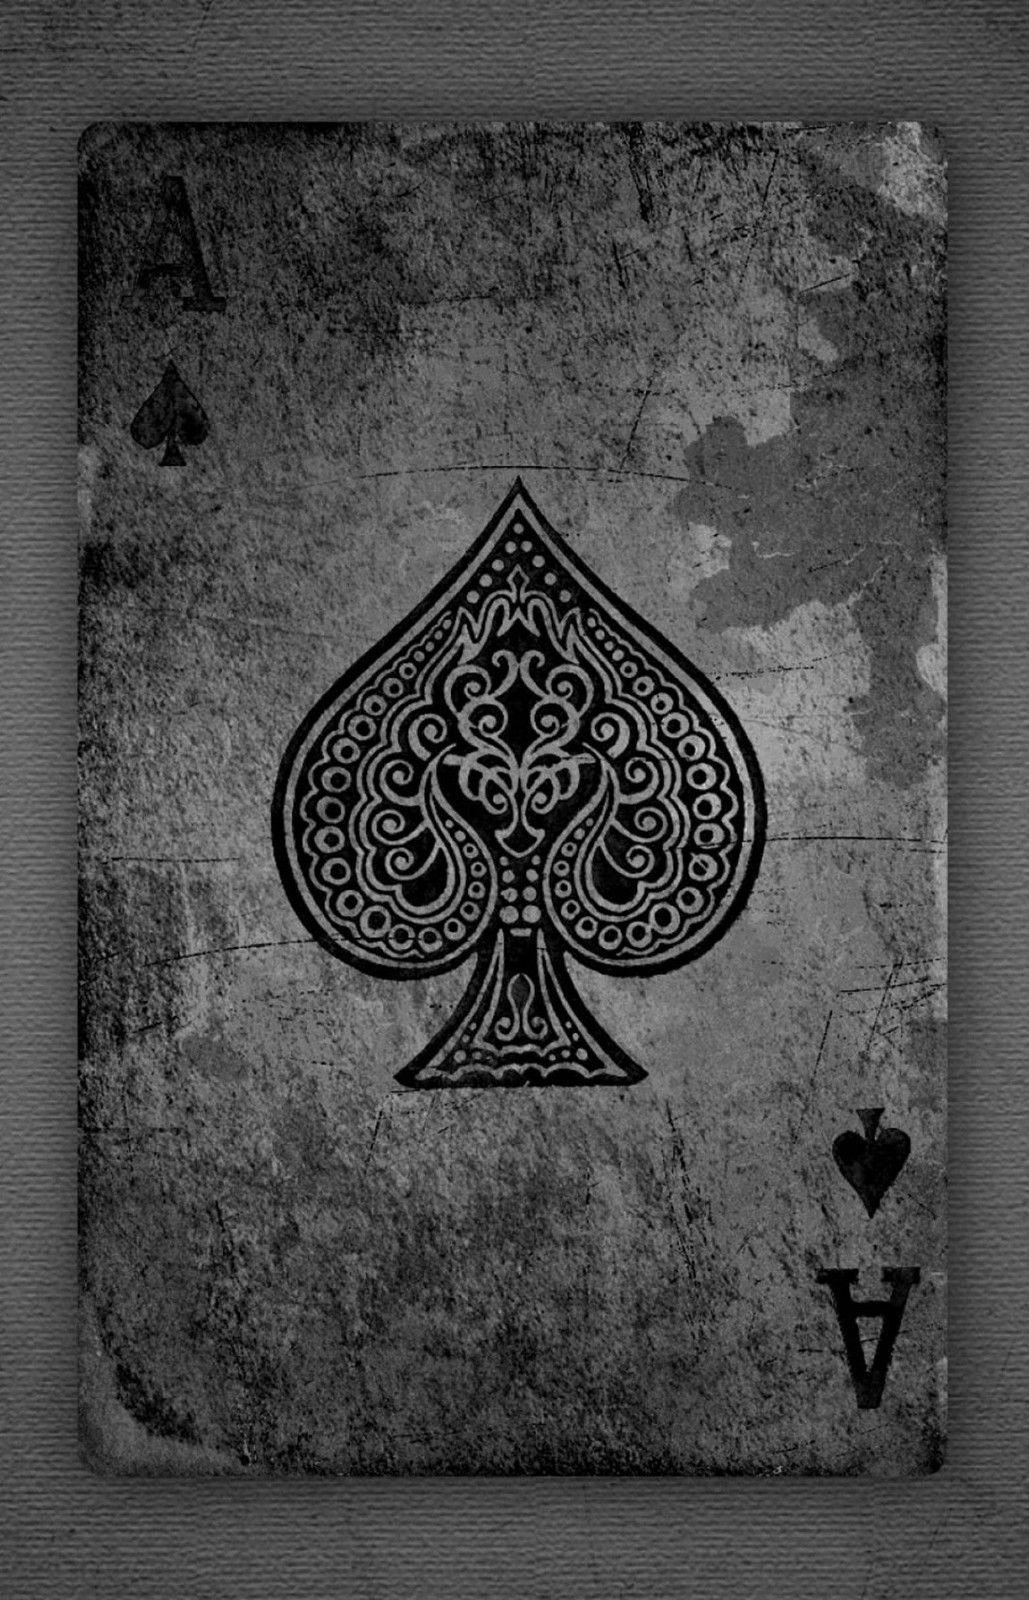 King Card Wallpaper Hd - 1029x1600 Wallpaper 